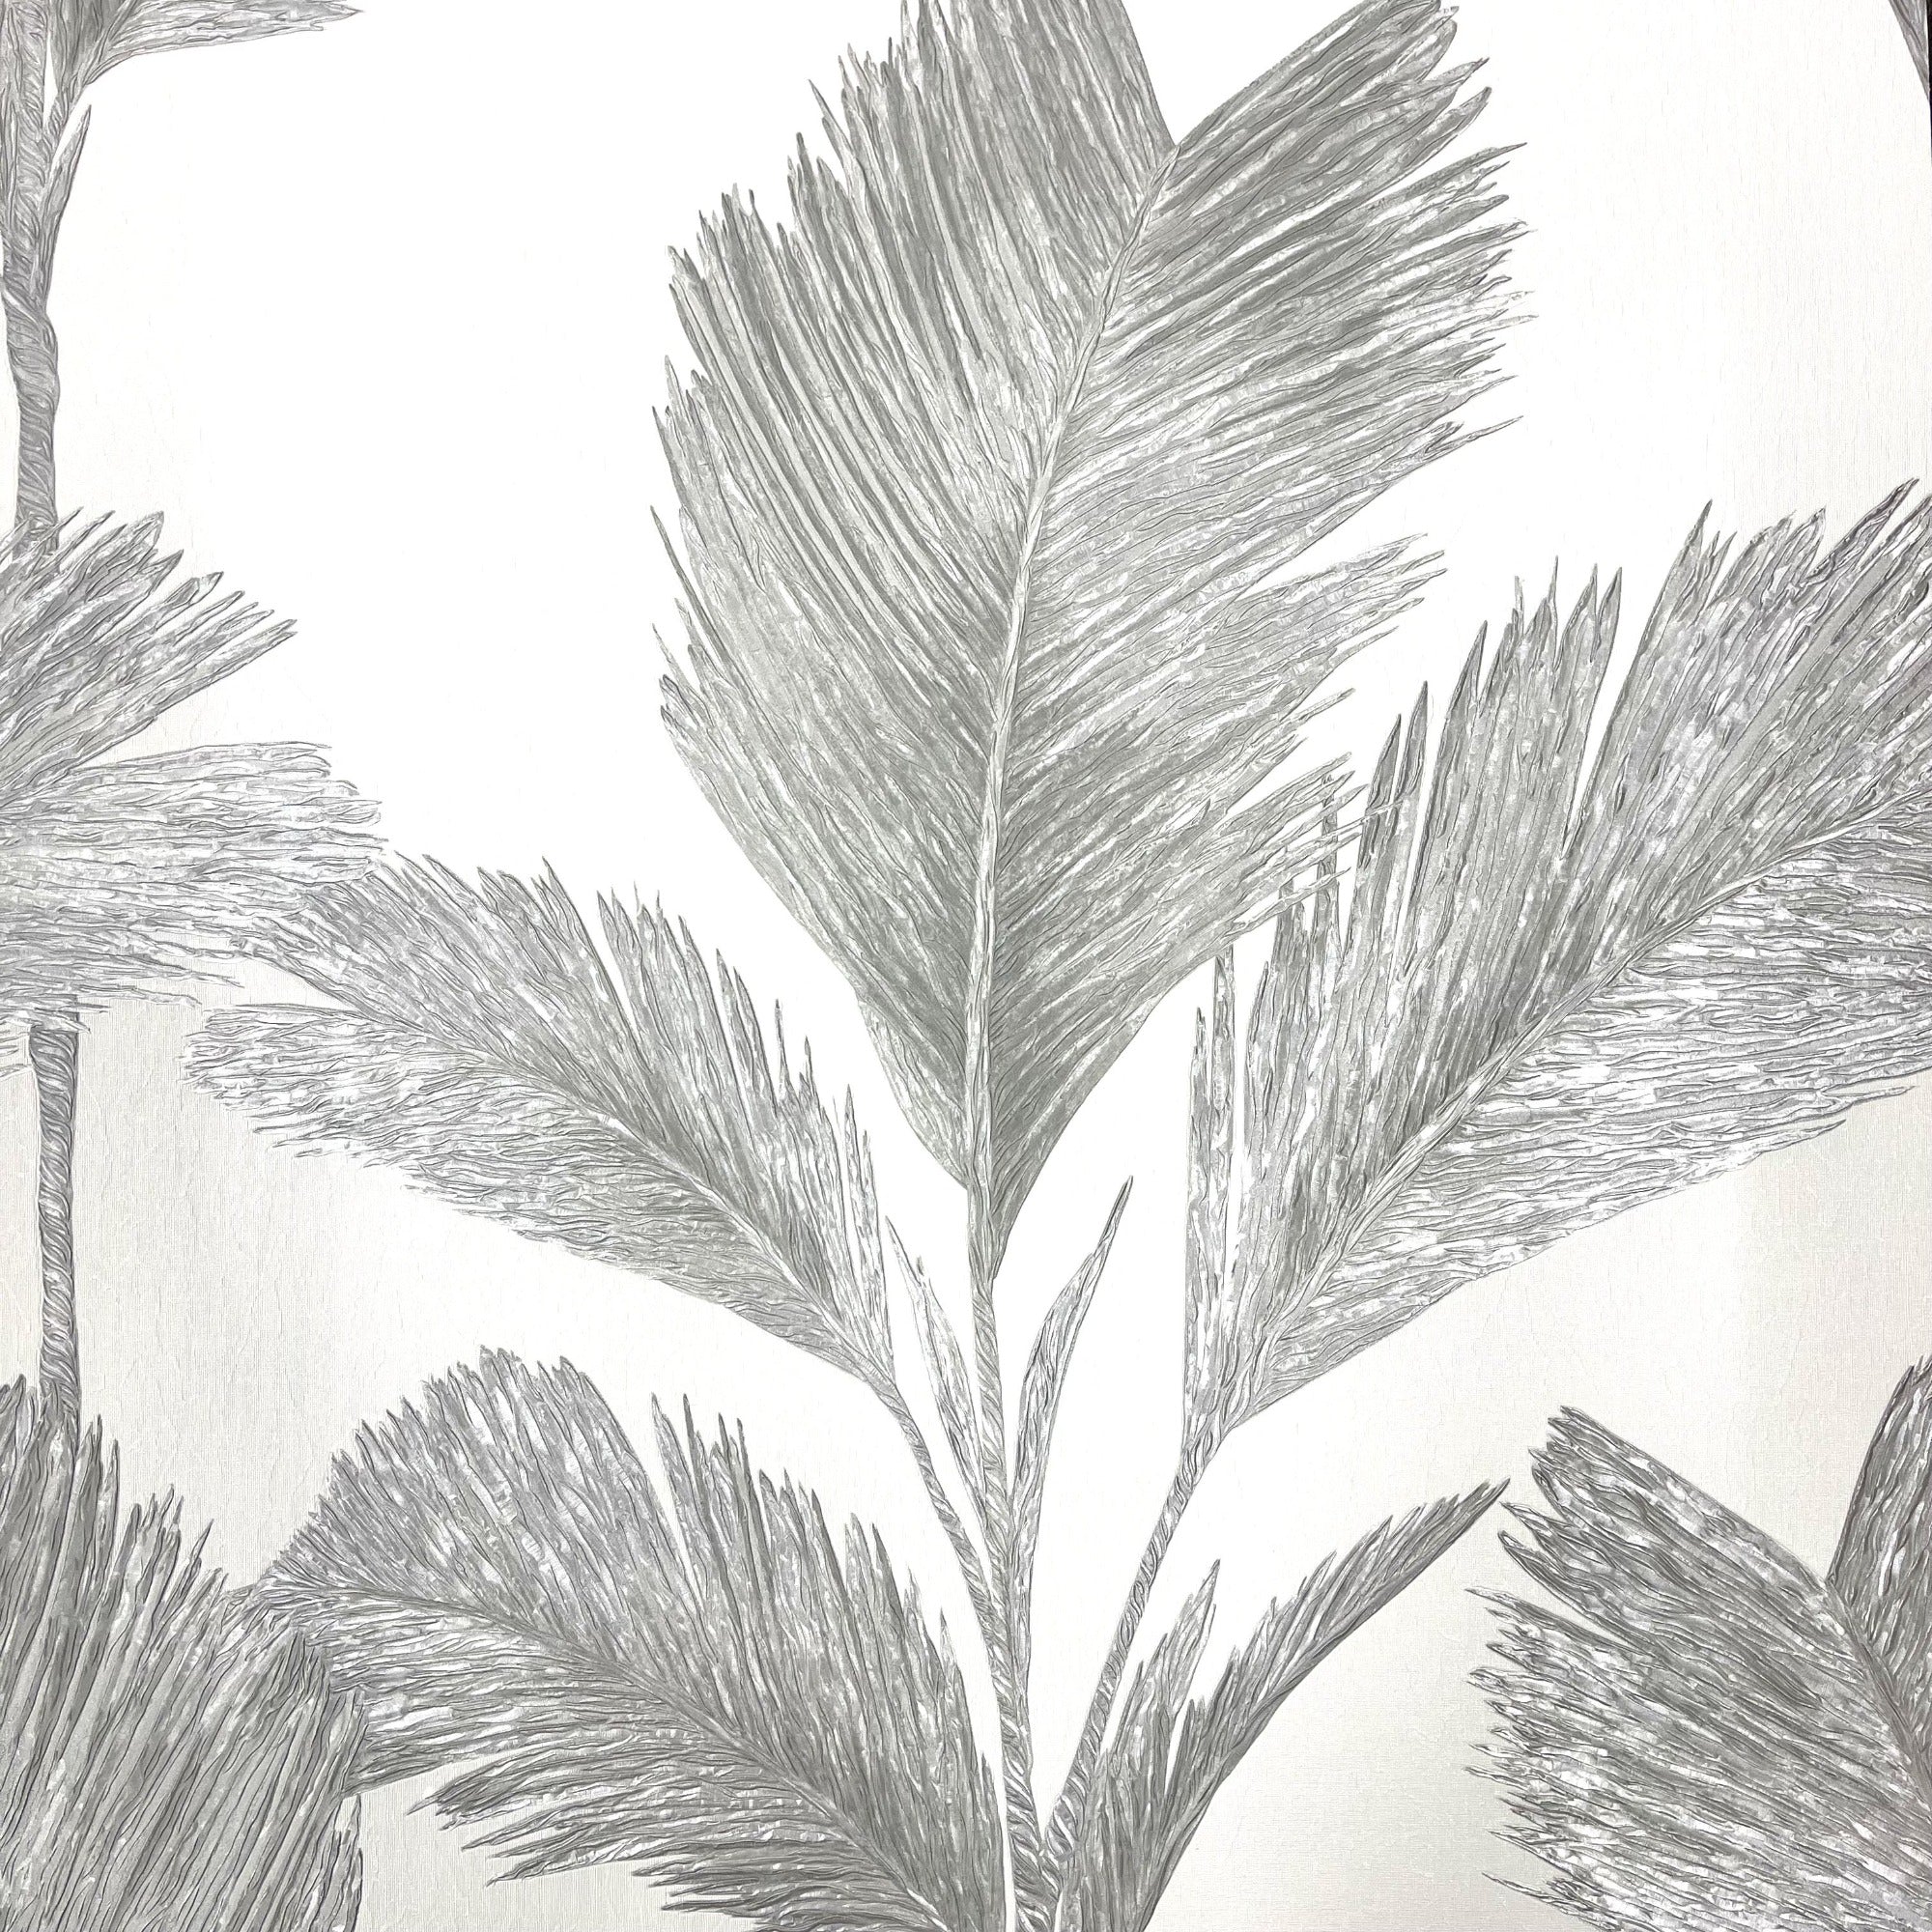 Alessia Leaf Silver/White Wallpaper | WonderWall by Nobletts | #Variant SKU# | Belgravia